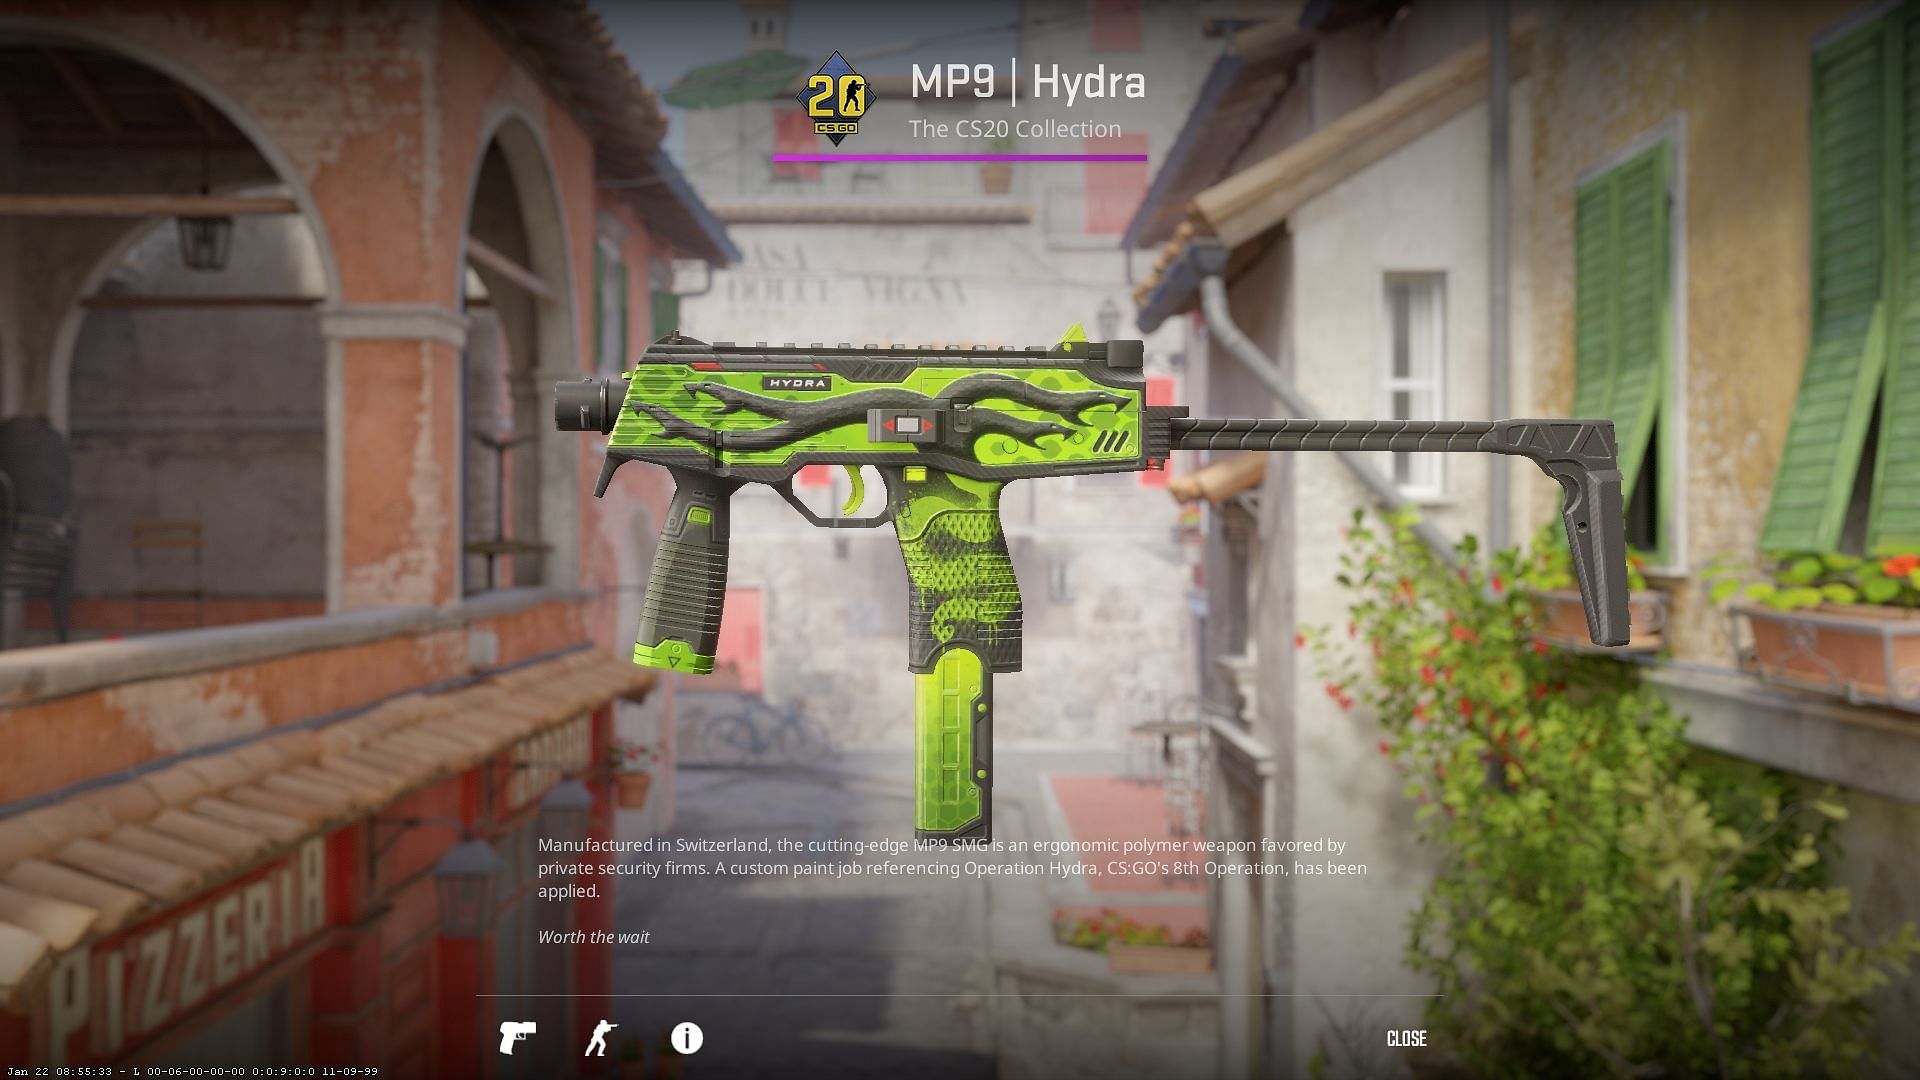 MP9 Hydra (Image via Valve)